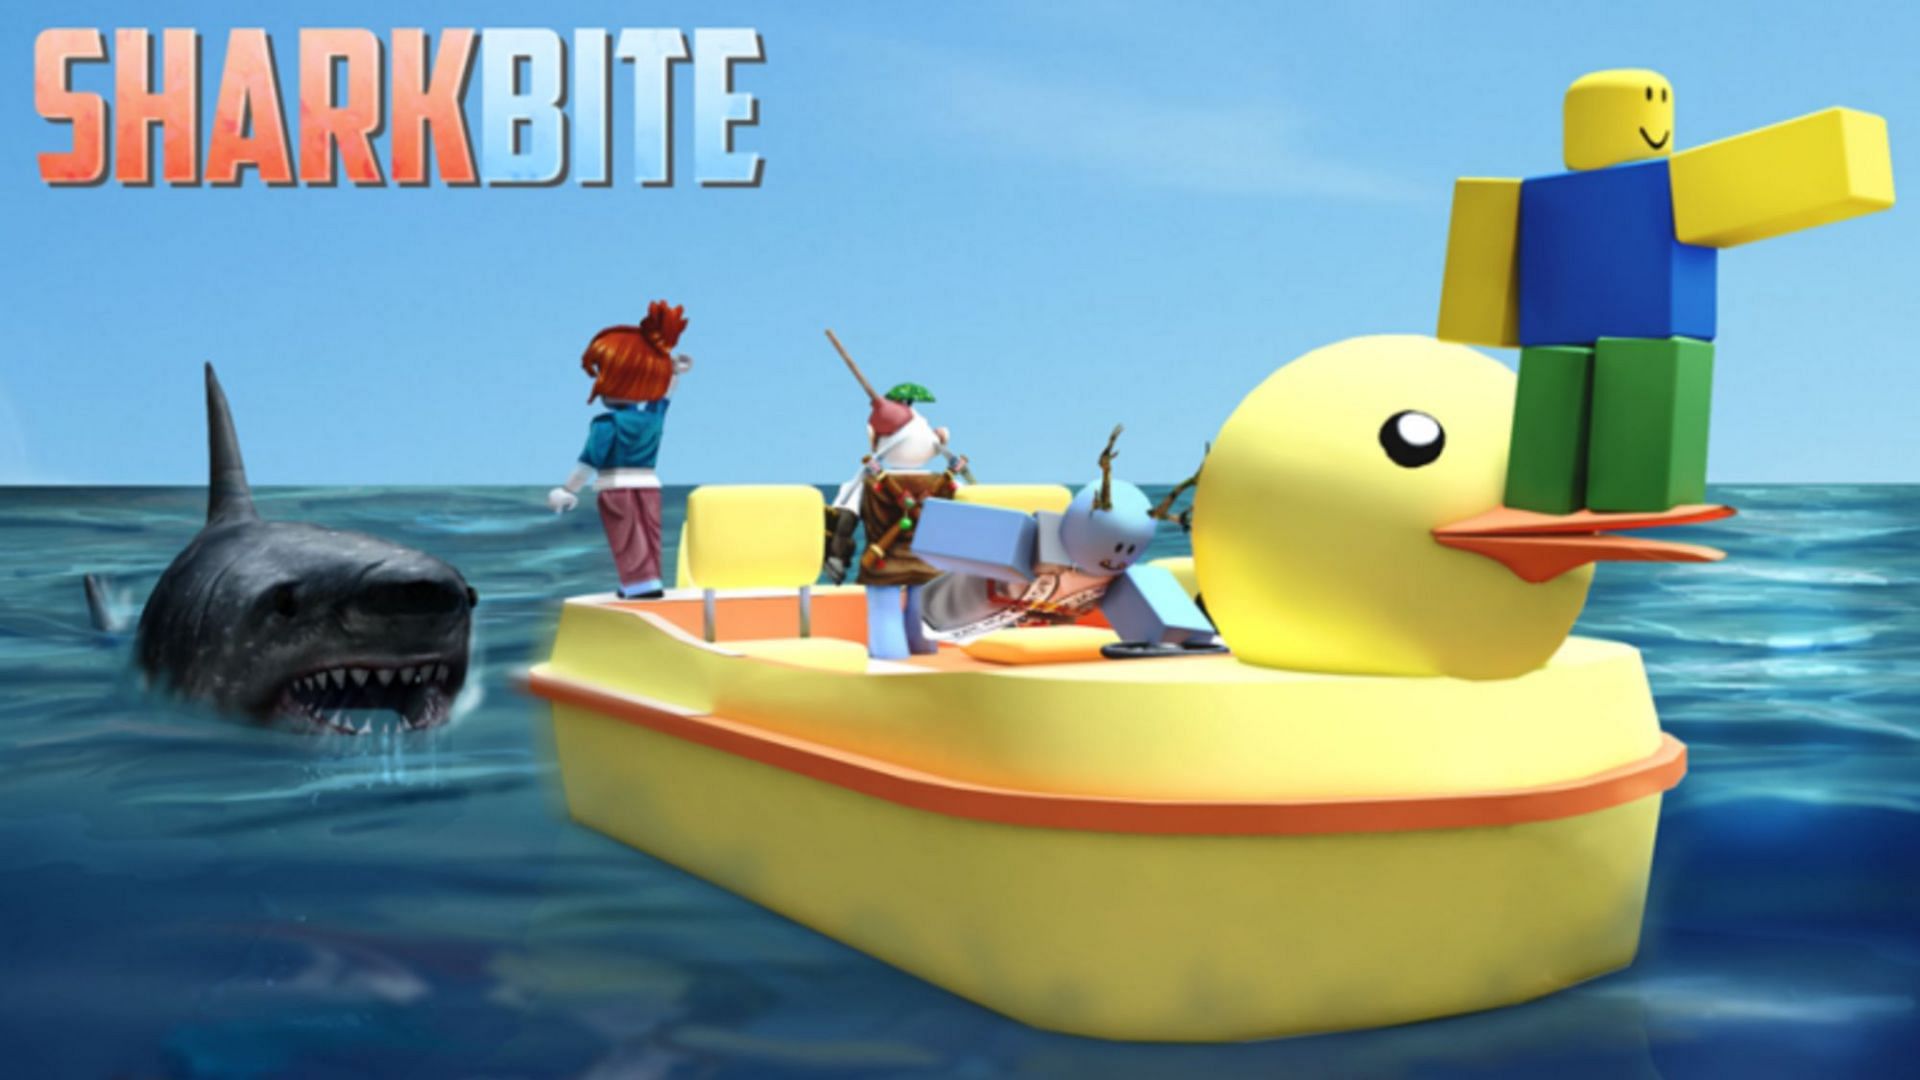 You Found Cannon Rubber Duck! - Roblox